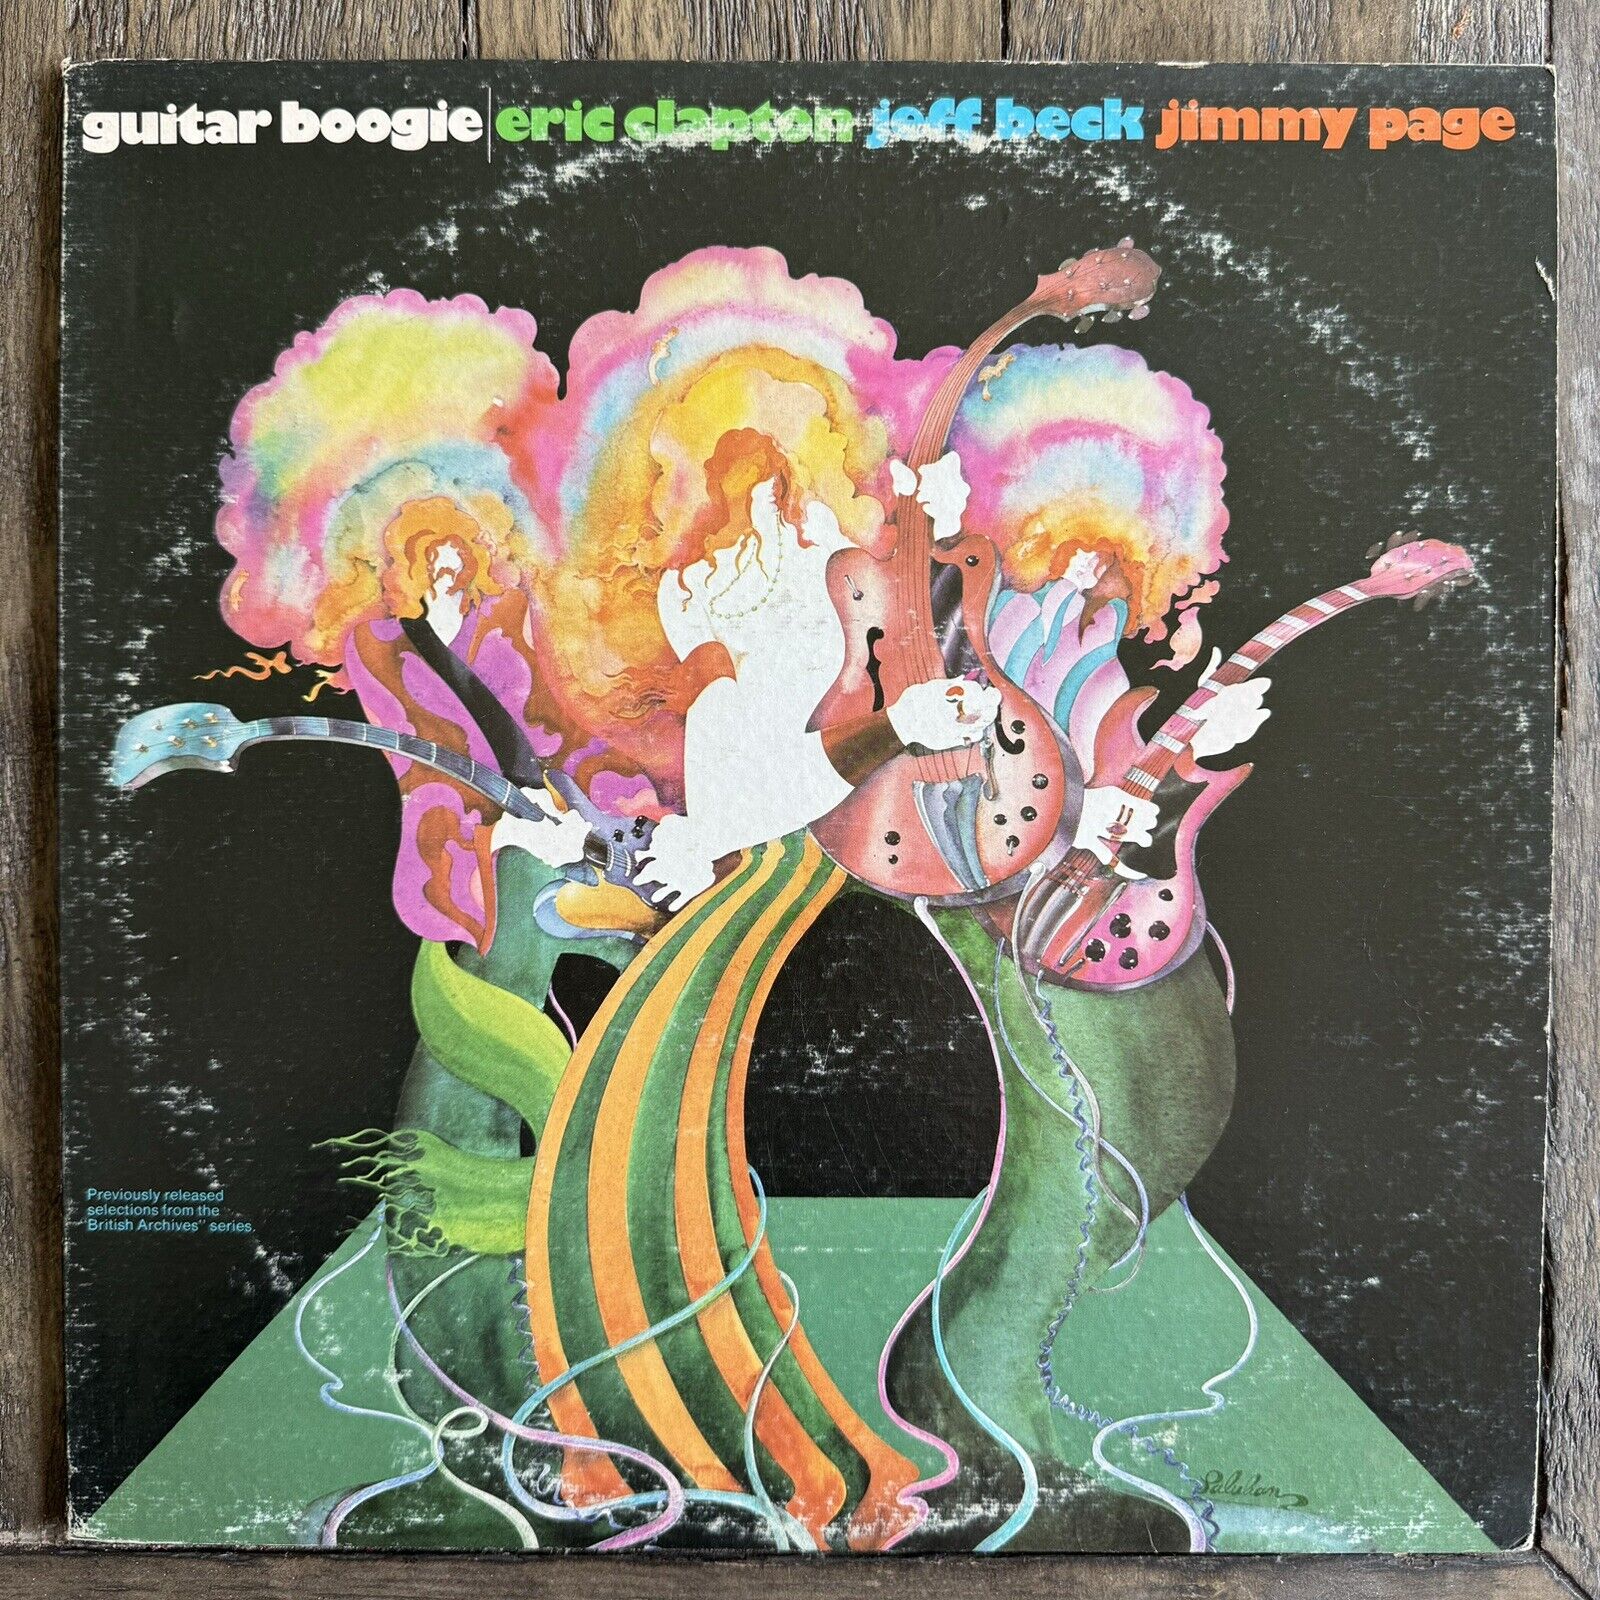 Eric Clapton, Jeff Beck, Jimmy Page - Guitar Boogie, Vinyl LP (1971) VG+/VG